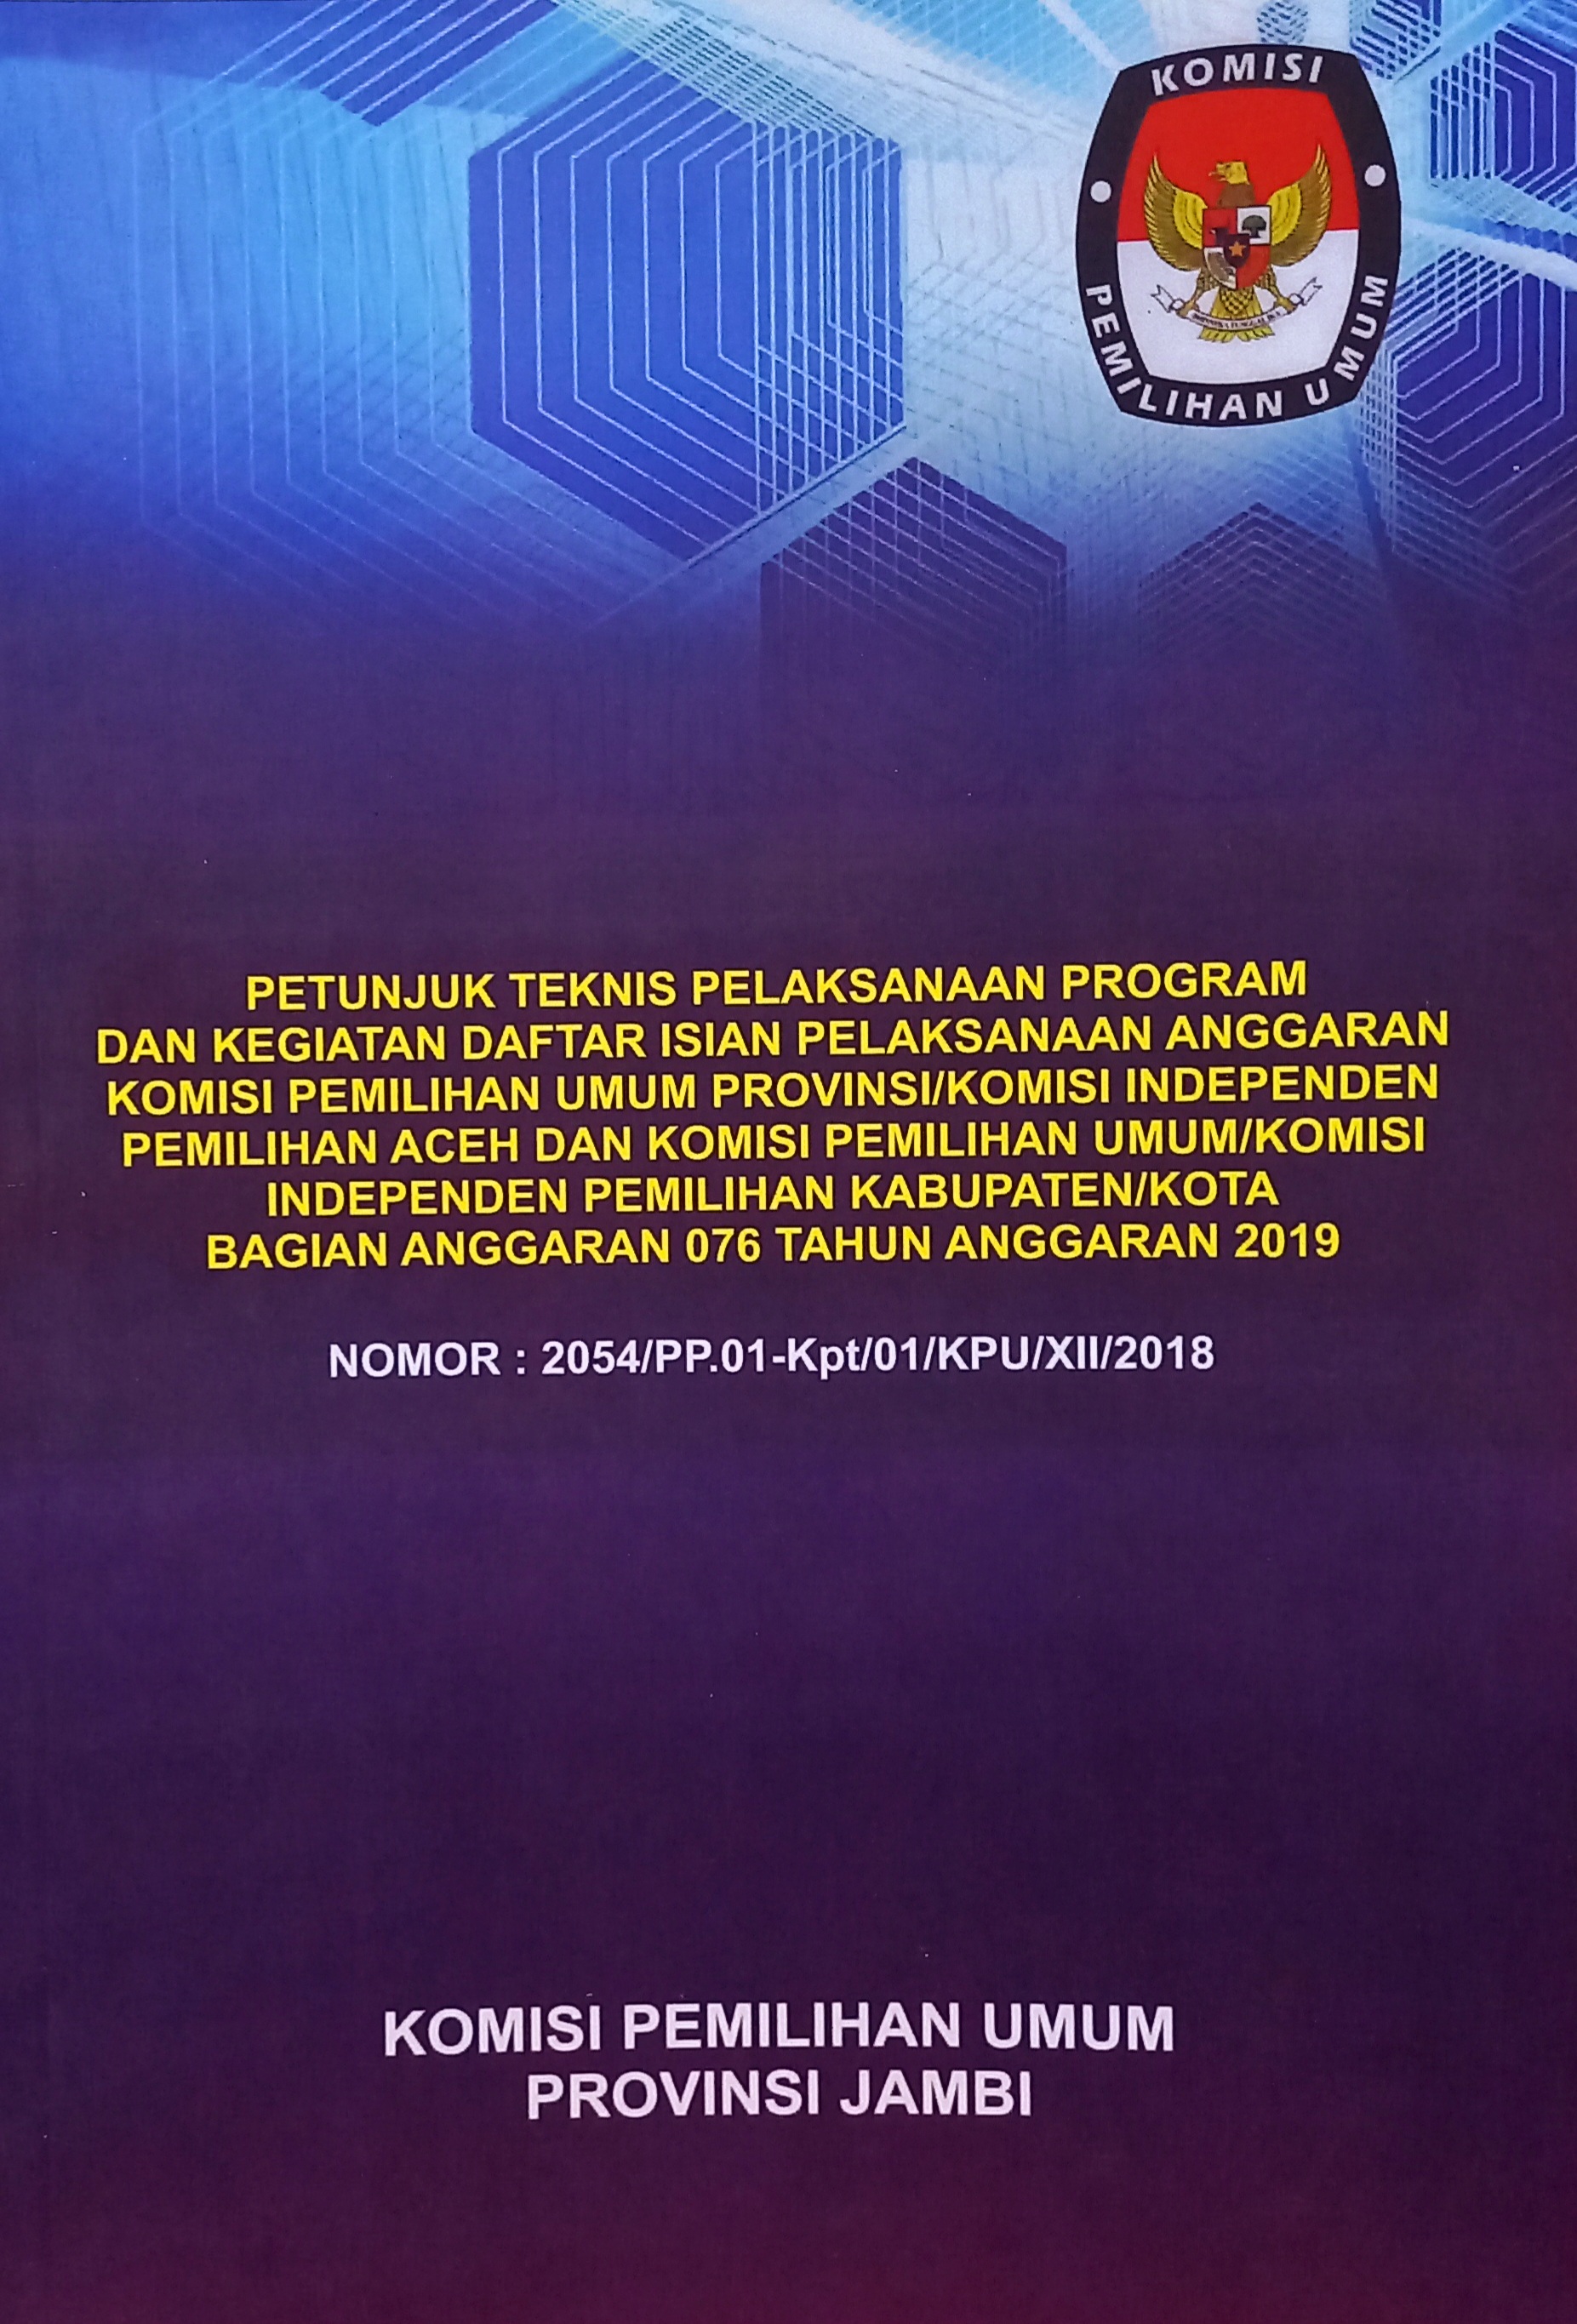 Keputusan Komisi Pemilihan Umum Republik Indonesia Nomor 2054/PP.01-Kpt/01/KPU/XII/2018 Tentang Petunjuk Teknis Pelaksanaan Proram dan Kegiatan Daftar Isian Pelaksanaan Anggaran Komisi Pemilihan Umum Provinsi/Komisi Independen Pemilihan Aceh dan Komisi Pe